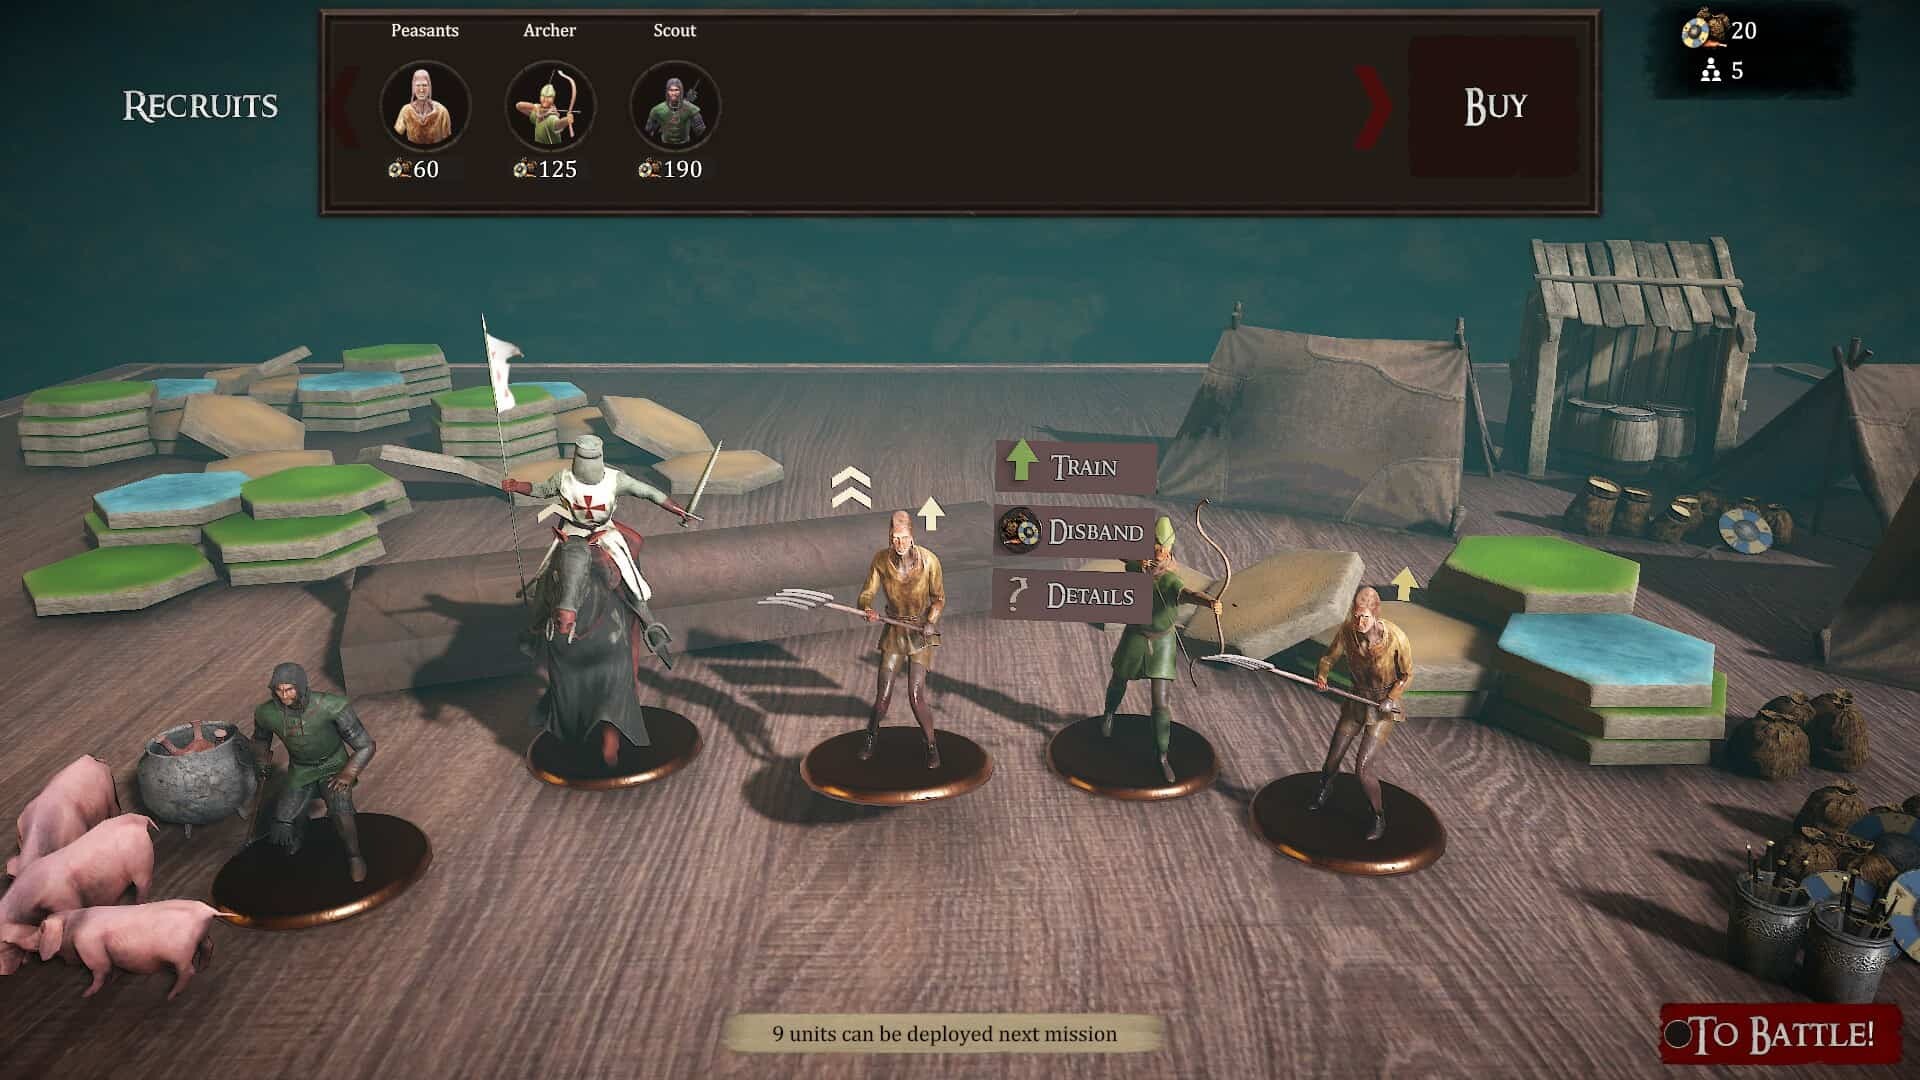 To Battle!: Hell's Crusade game screenshot, units